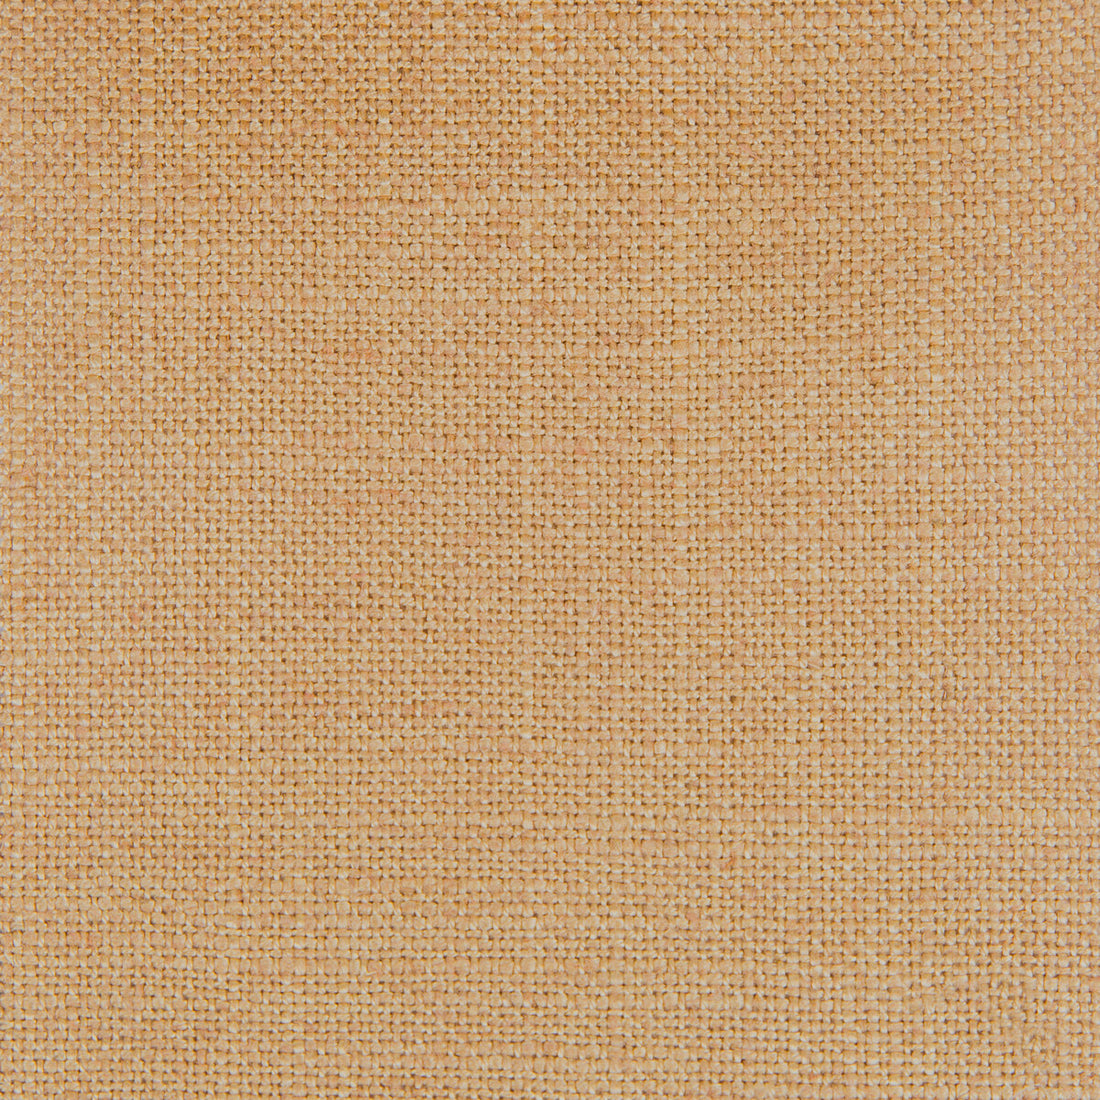 Peru fabric in camel color - pattern GDT5548.006.0 - by Gaston y Daniela in the Gaston Nuevo Mundo collection